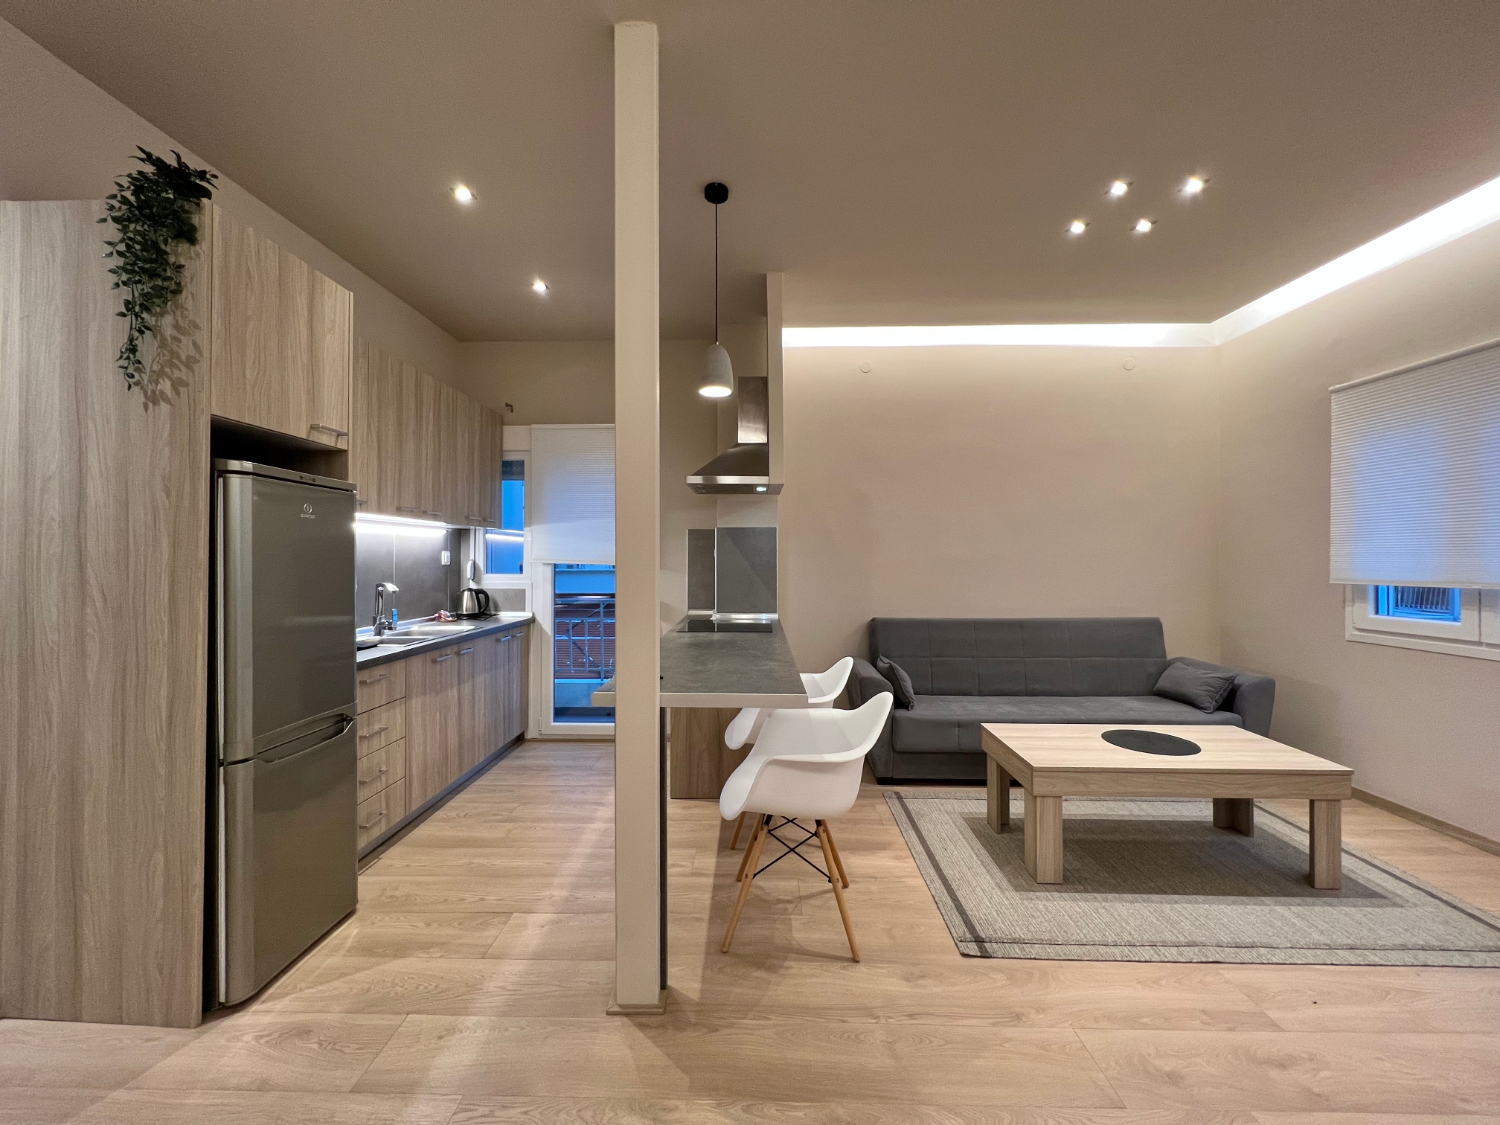 Living Area & Kitchen